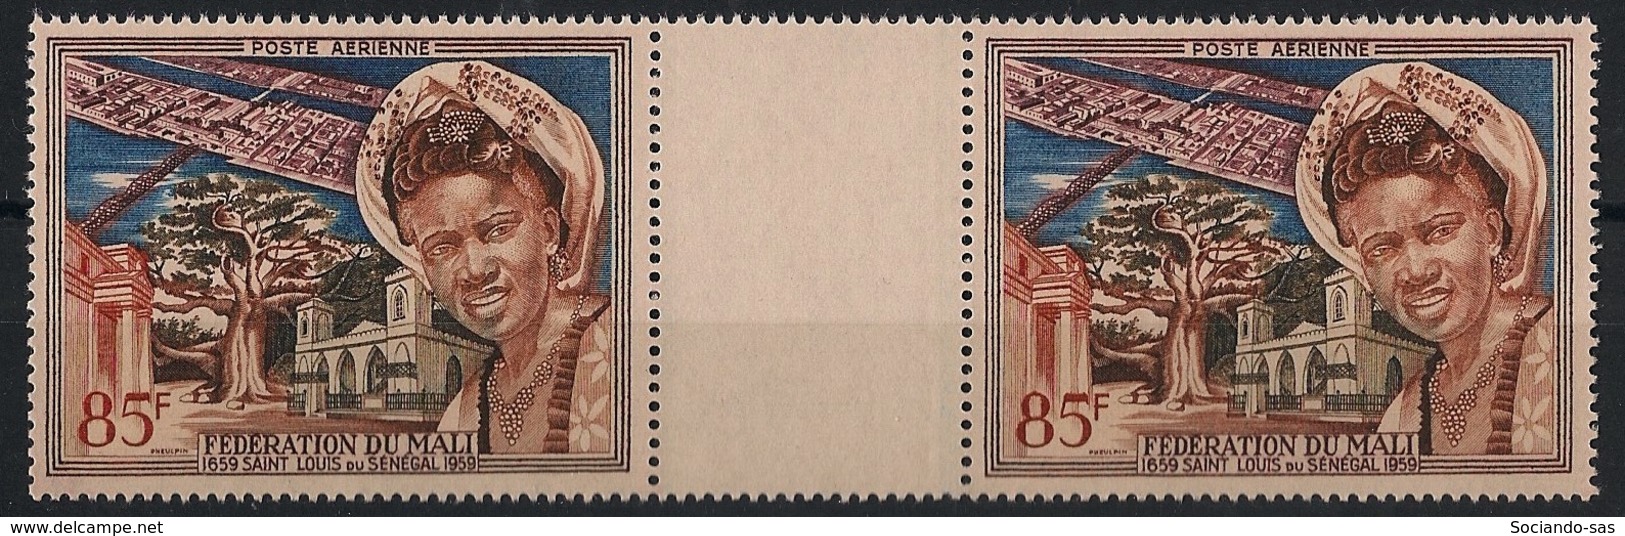 Mali - 1959 - Poste Aérienne PA N°Yv. 1 - St Louis Du Sénégal - Gutter Pair - Neuf Luxe ** / MNH / Postfrisch - Mali (1959-...)